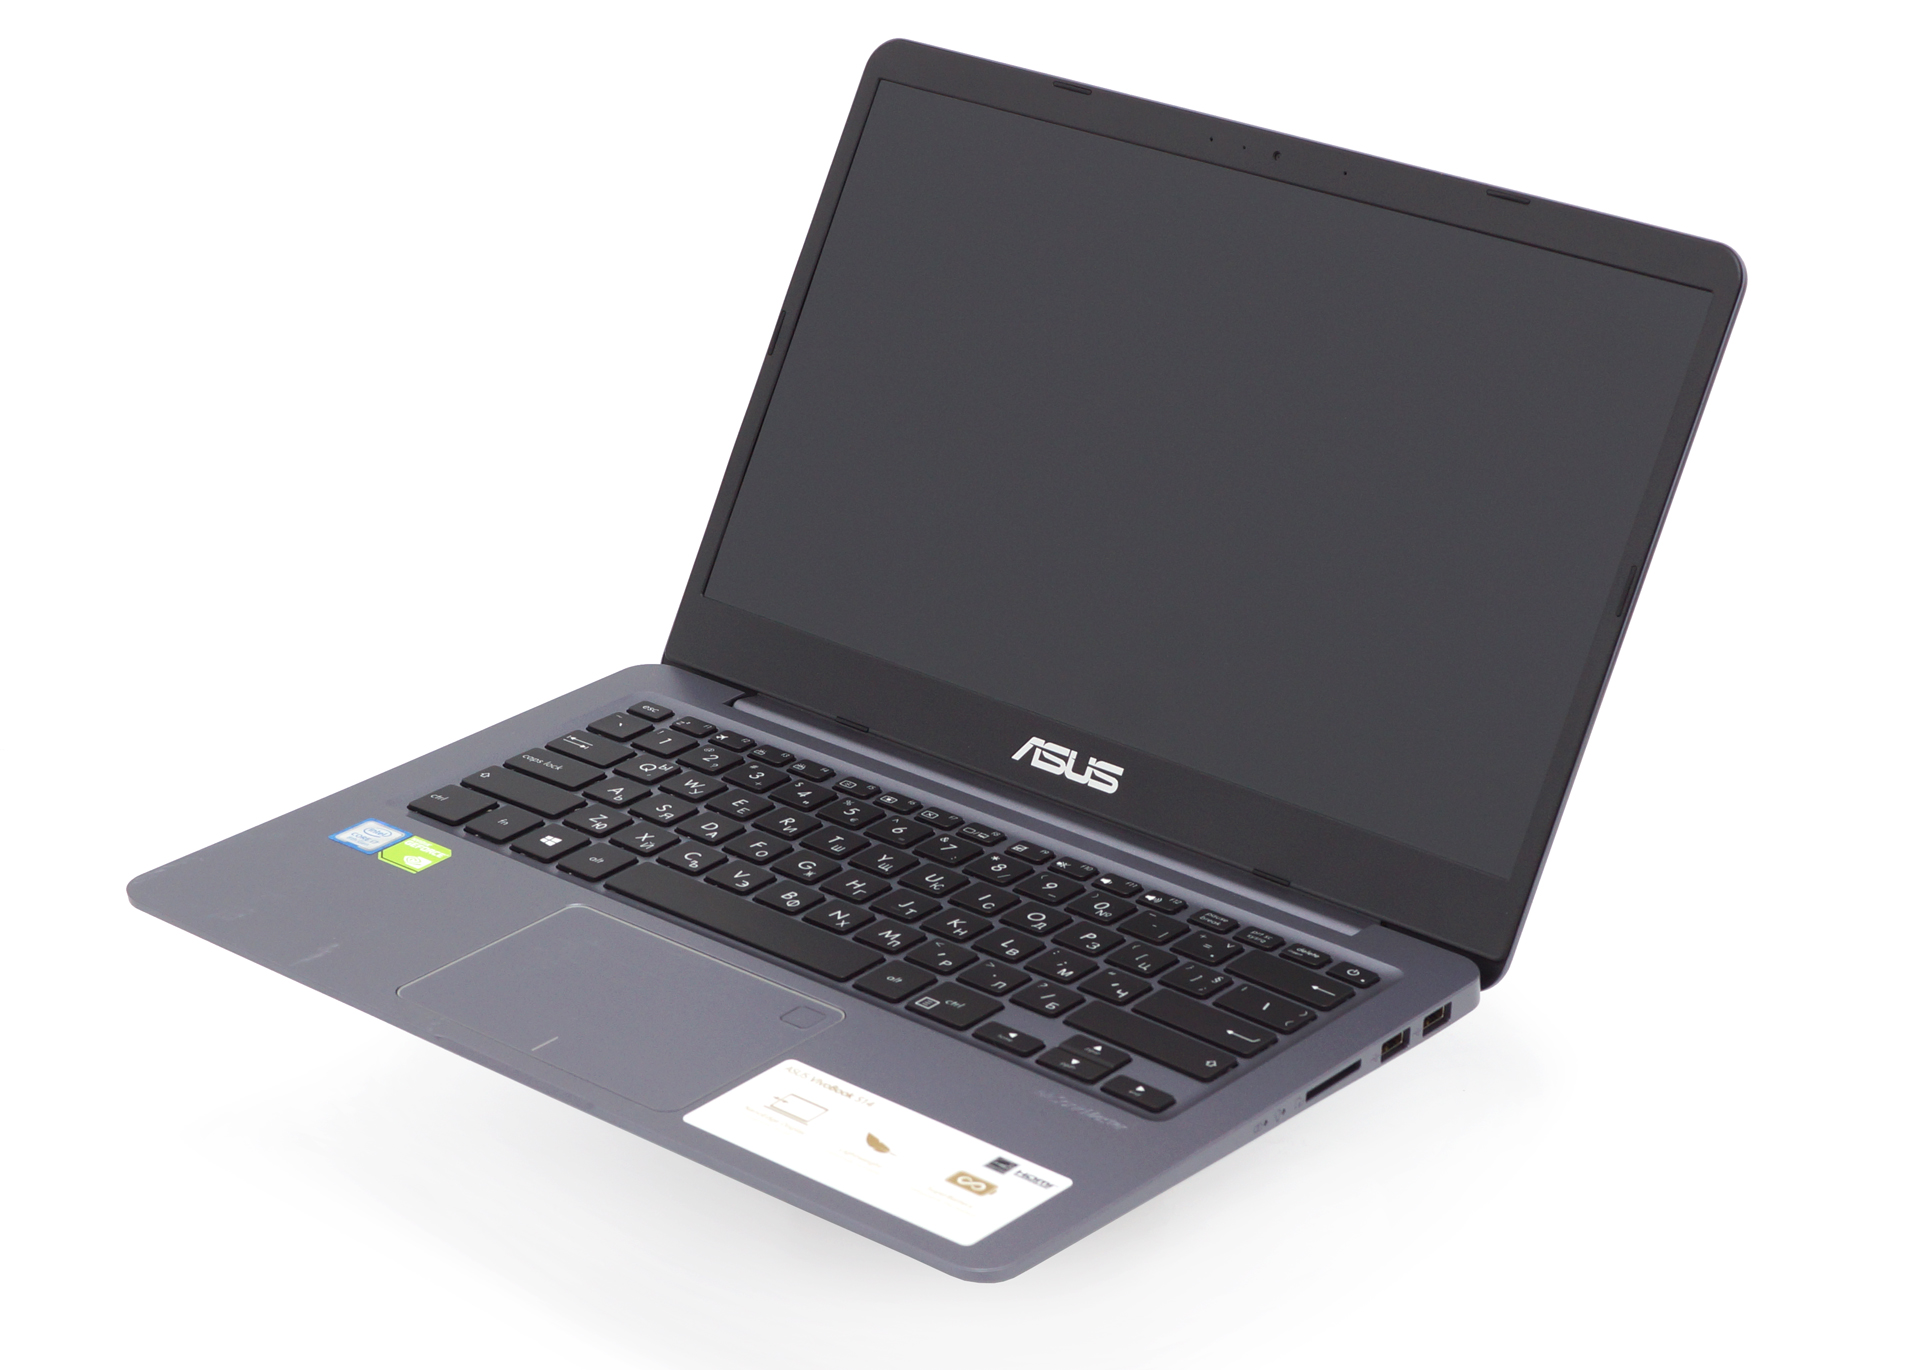 weekend Geplooid Vermelding ASUS VivoBook S14 (S410) review - a budget portable notebook |  LaptopMedia.com